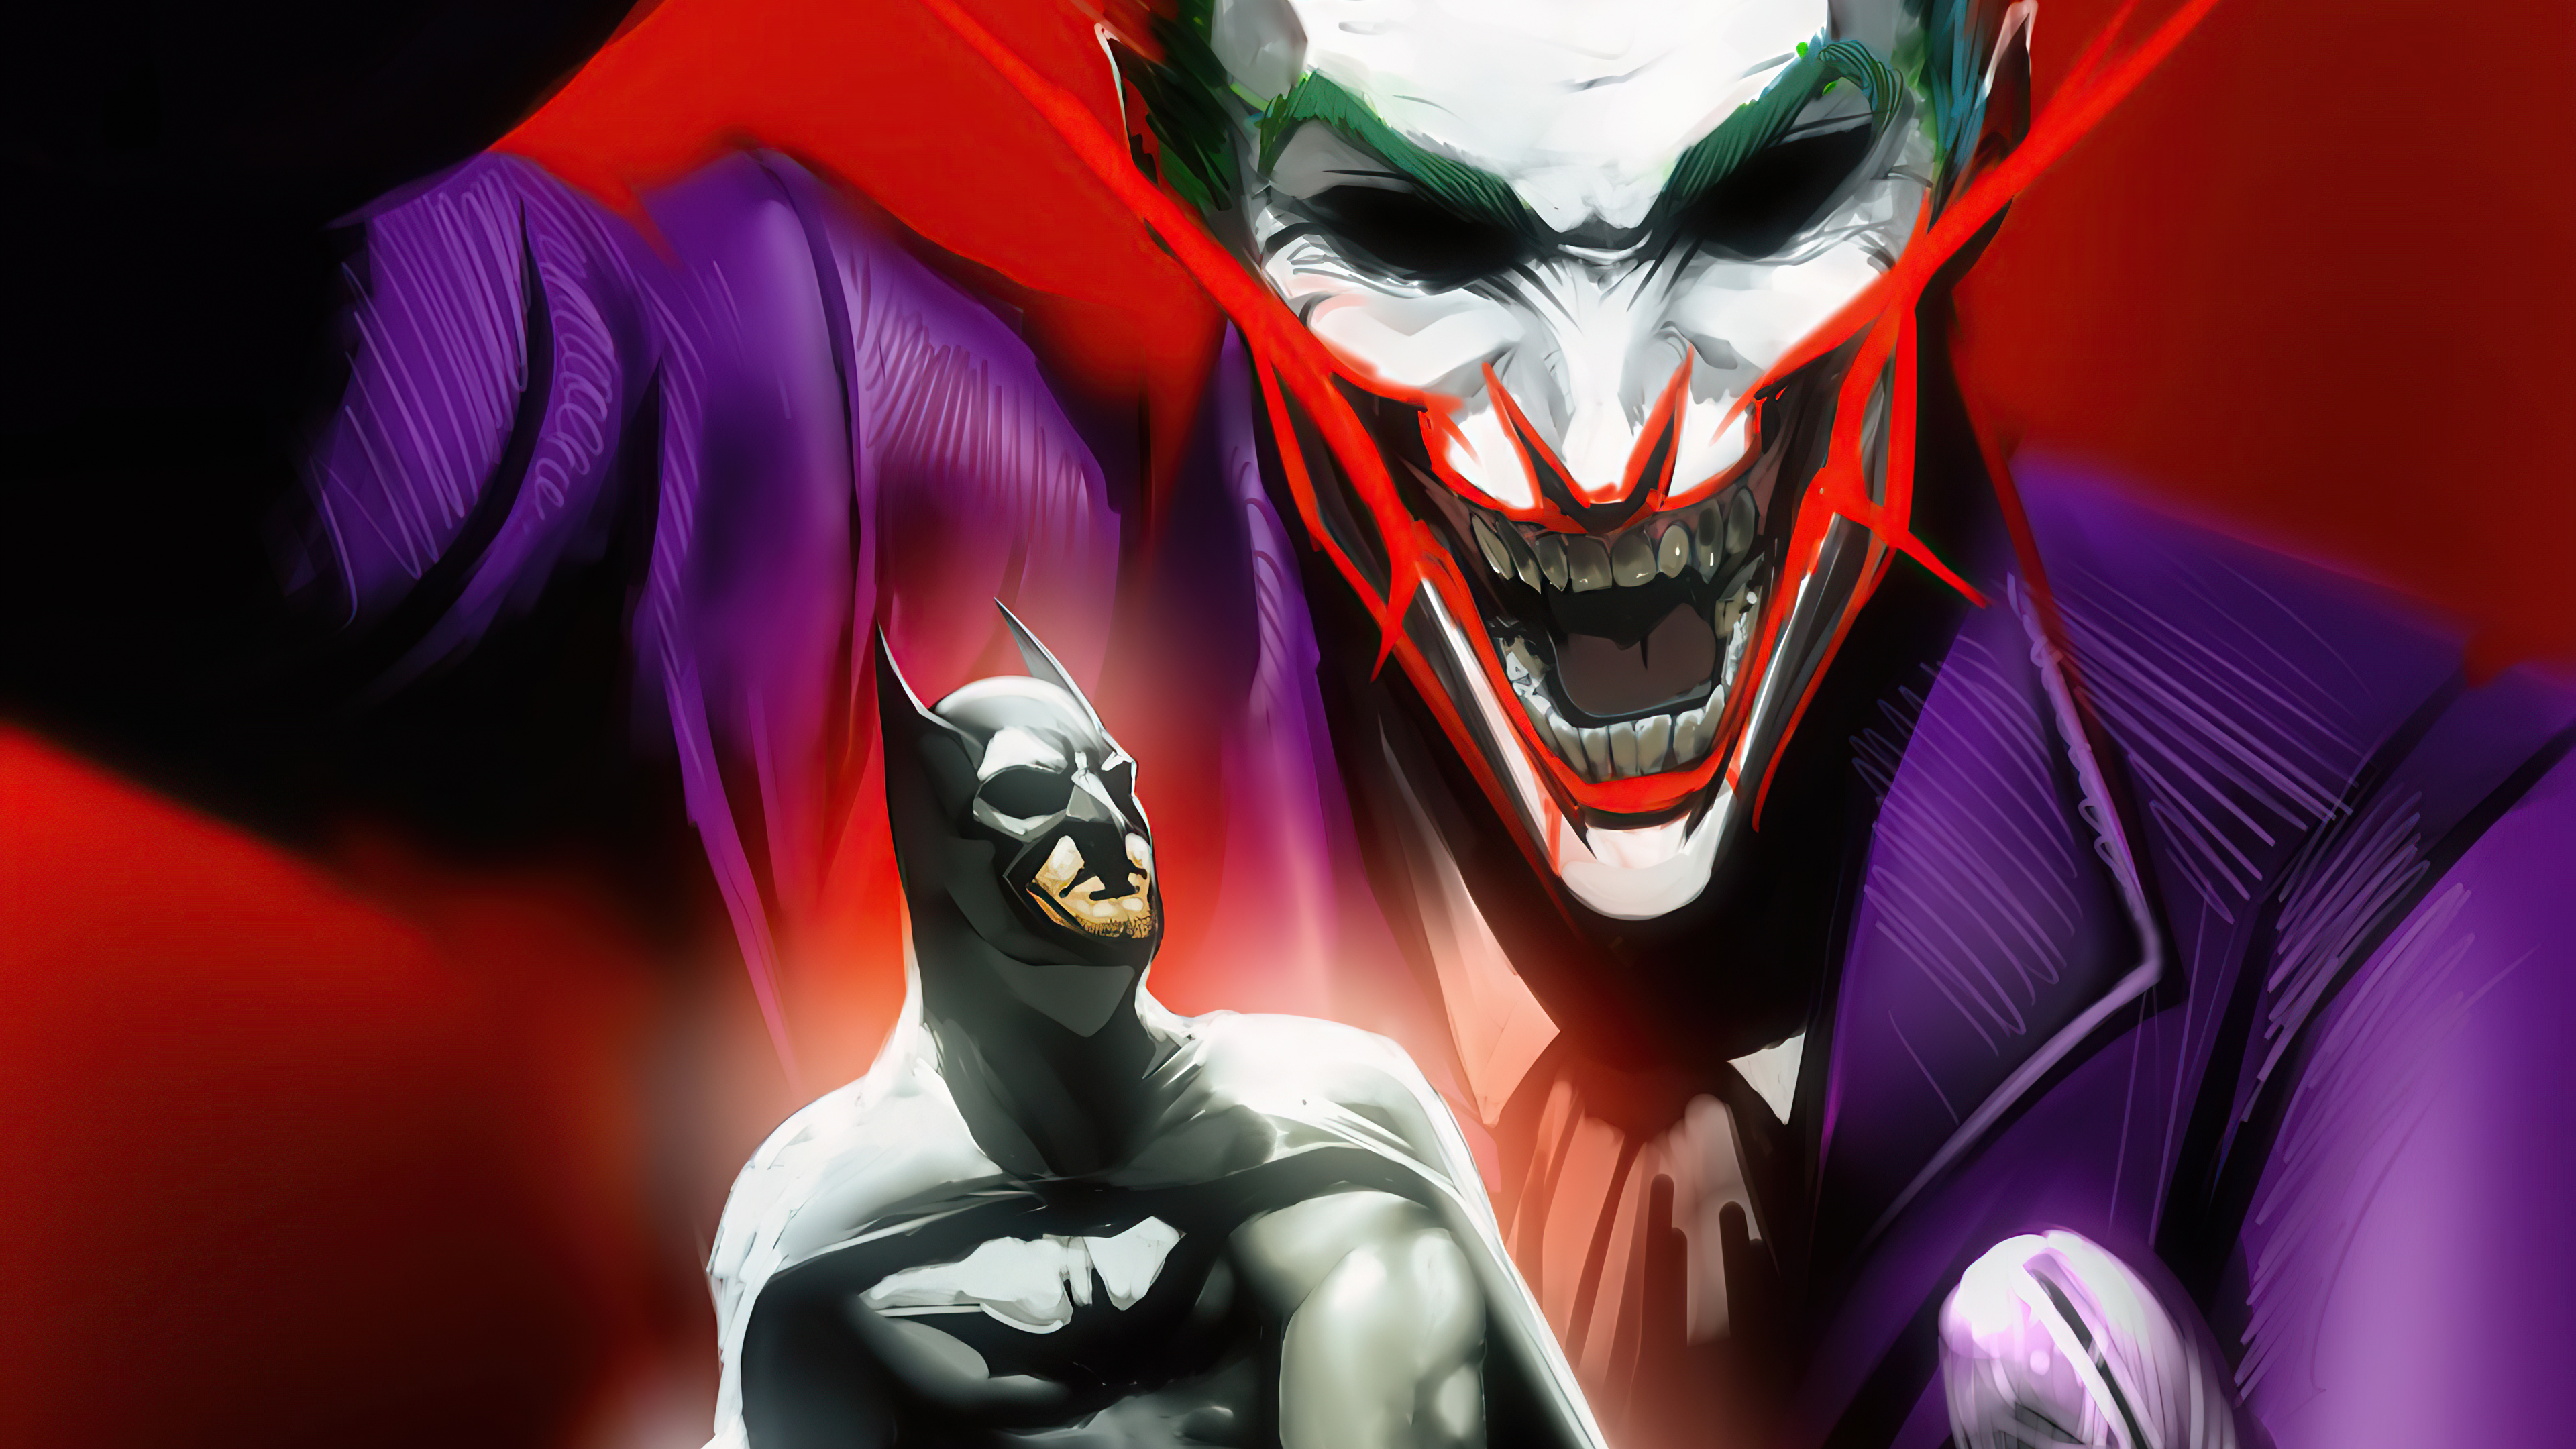 batman vs joker games online play free